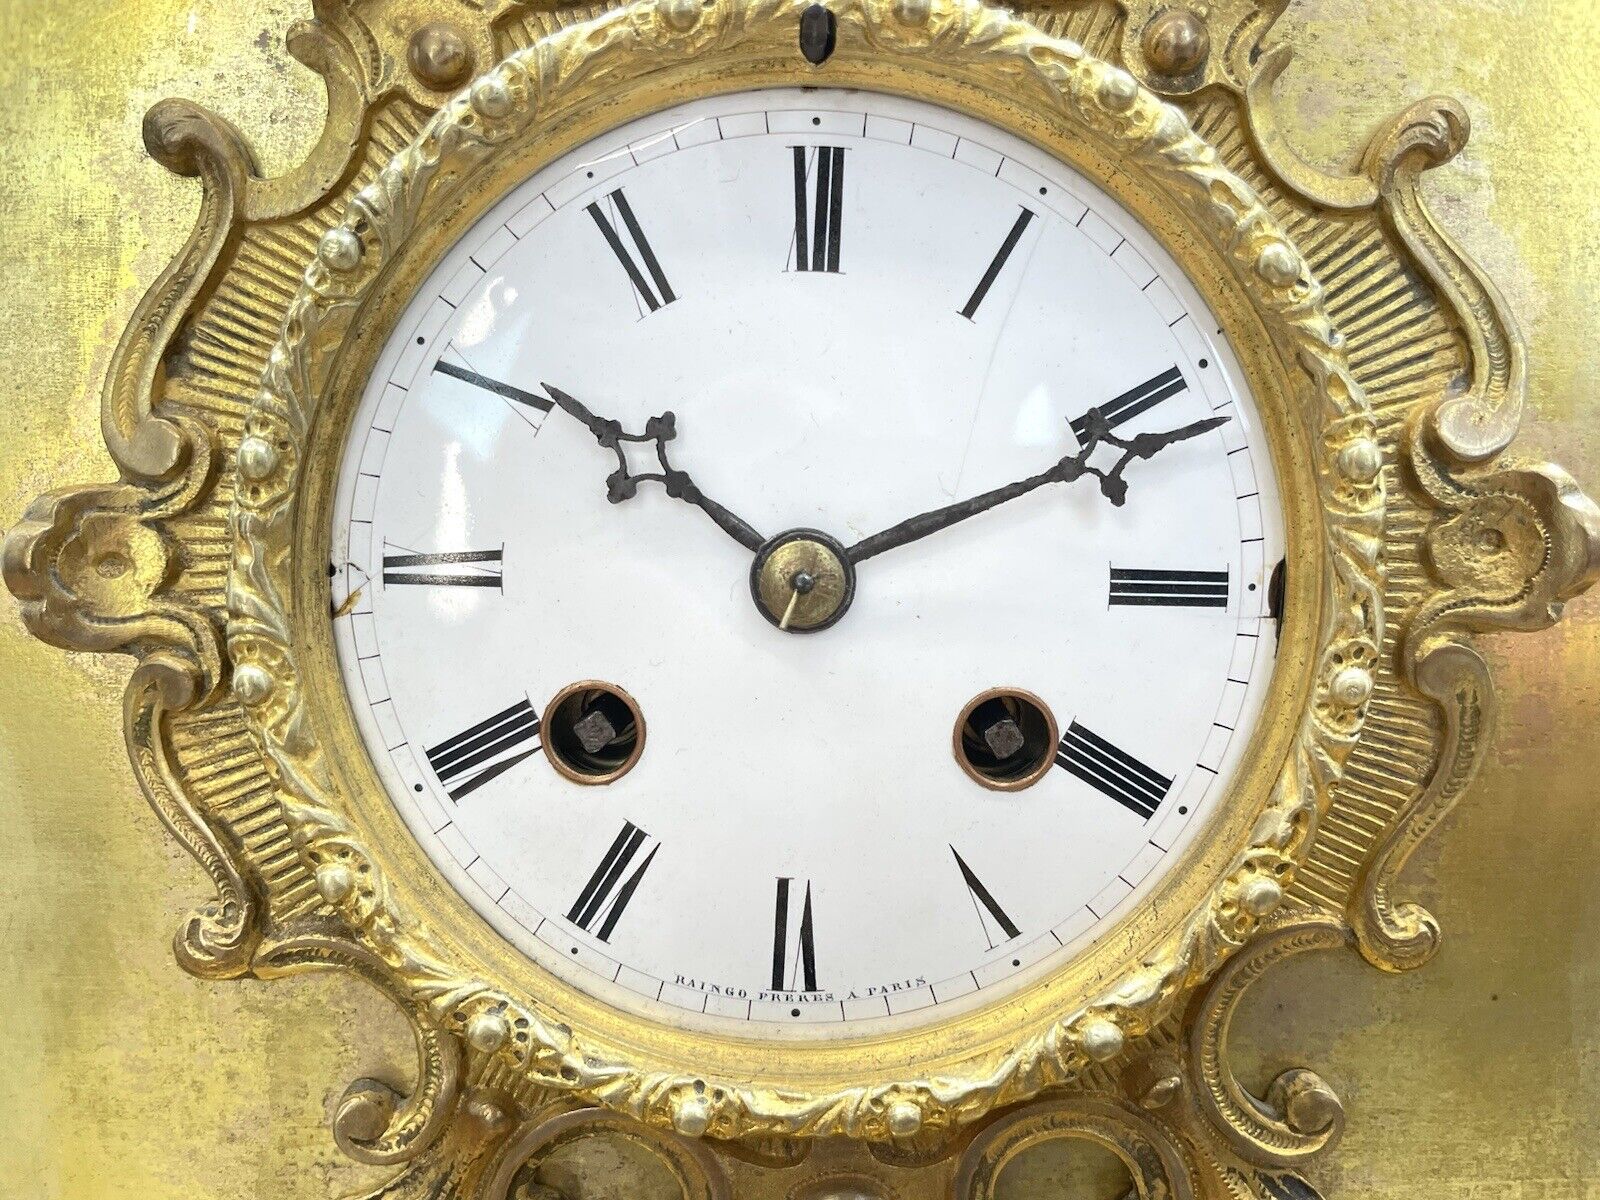 A fine, 19th Century French Empire, Gilt Mantel Clock by Raingo Freres